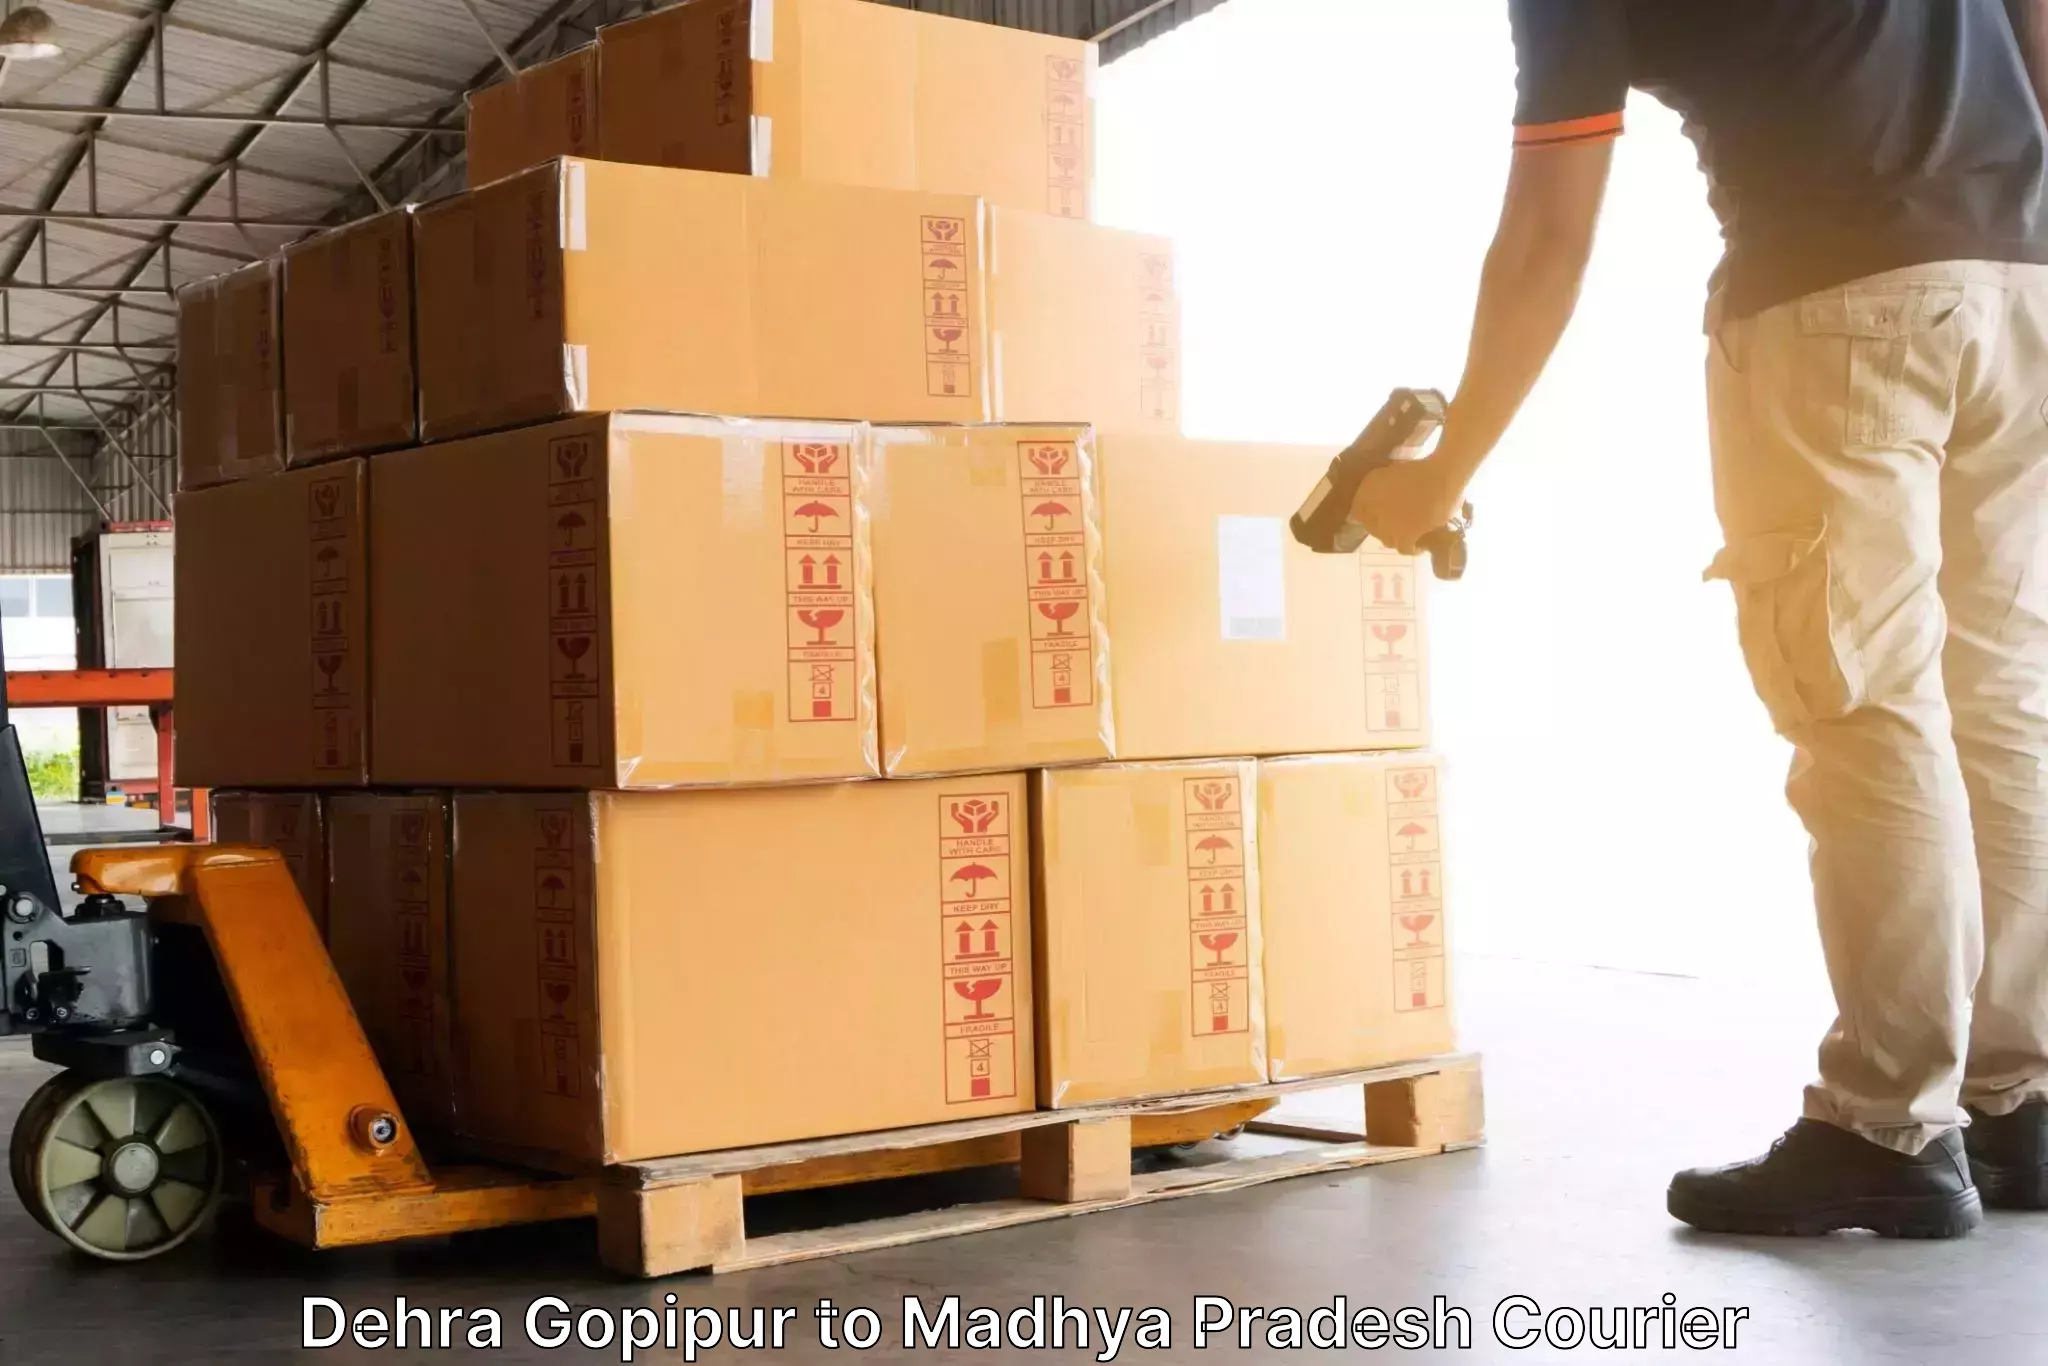 Express logistics providers Dehra Gopipur to Ratlam